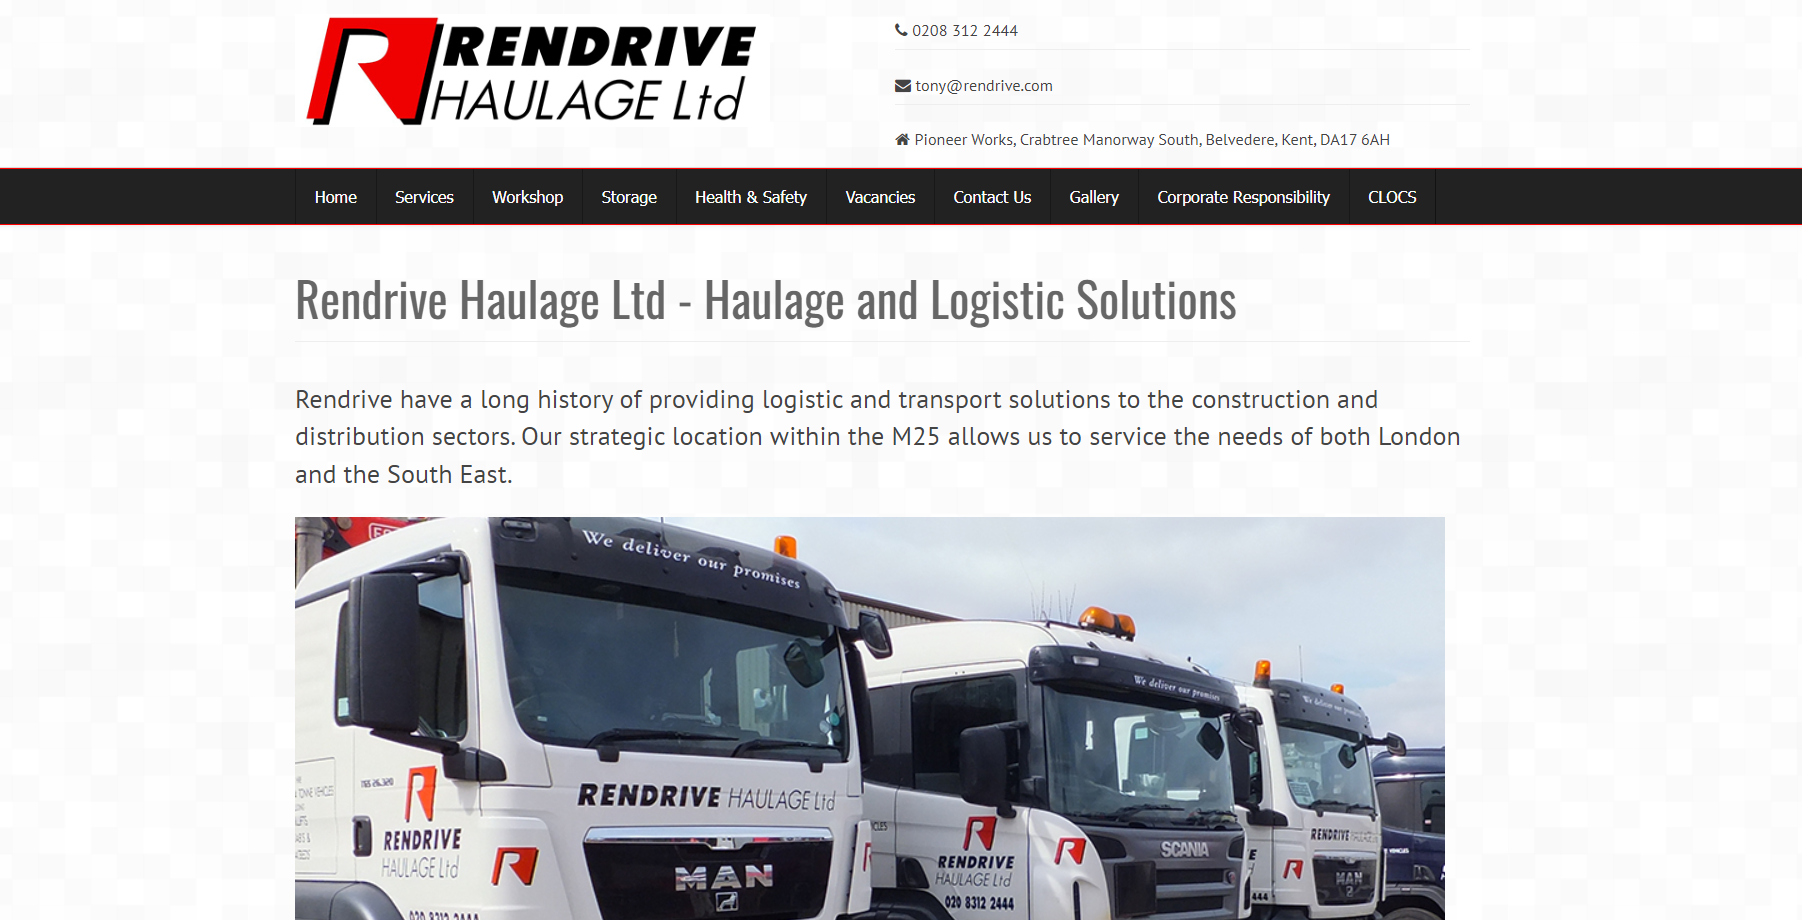 Rendrive Haulage Ltd